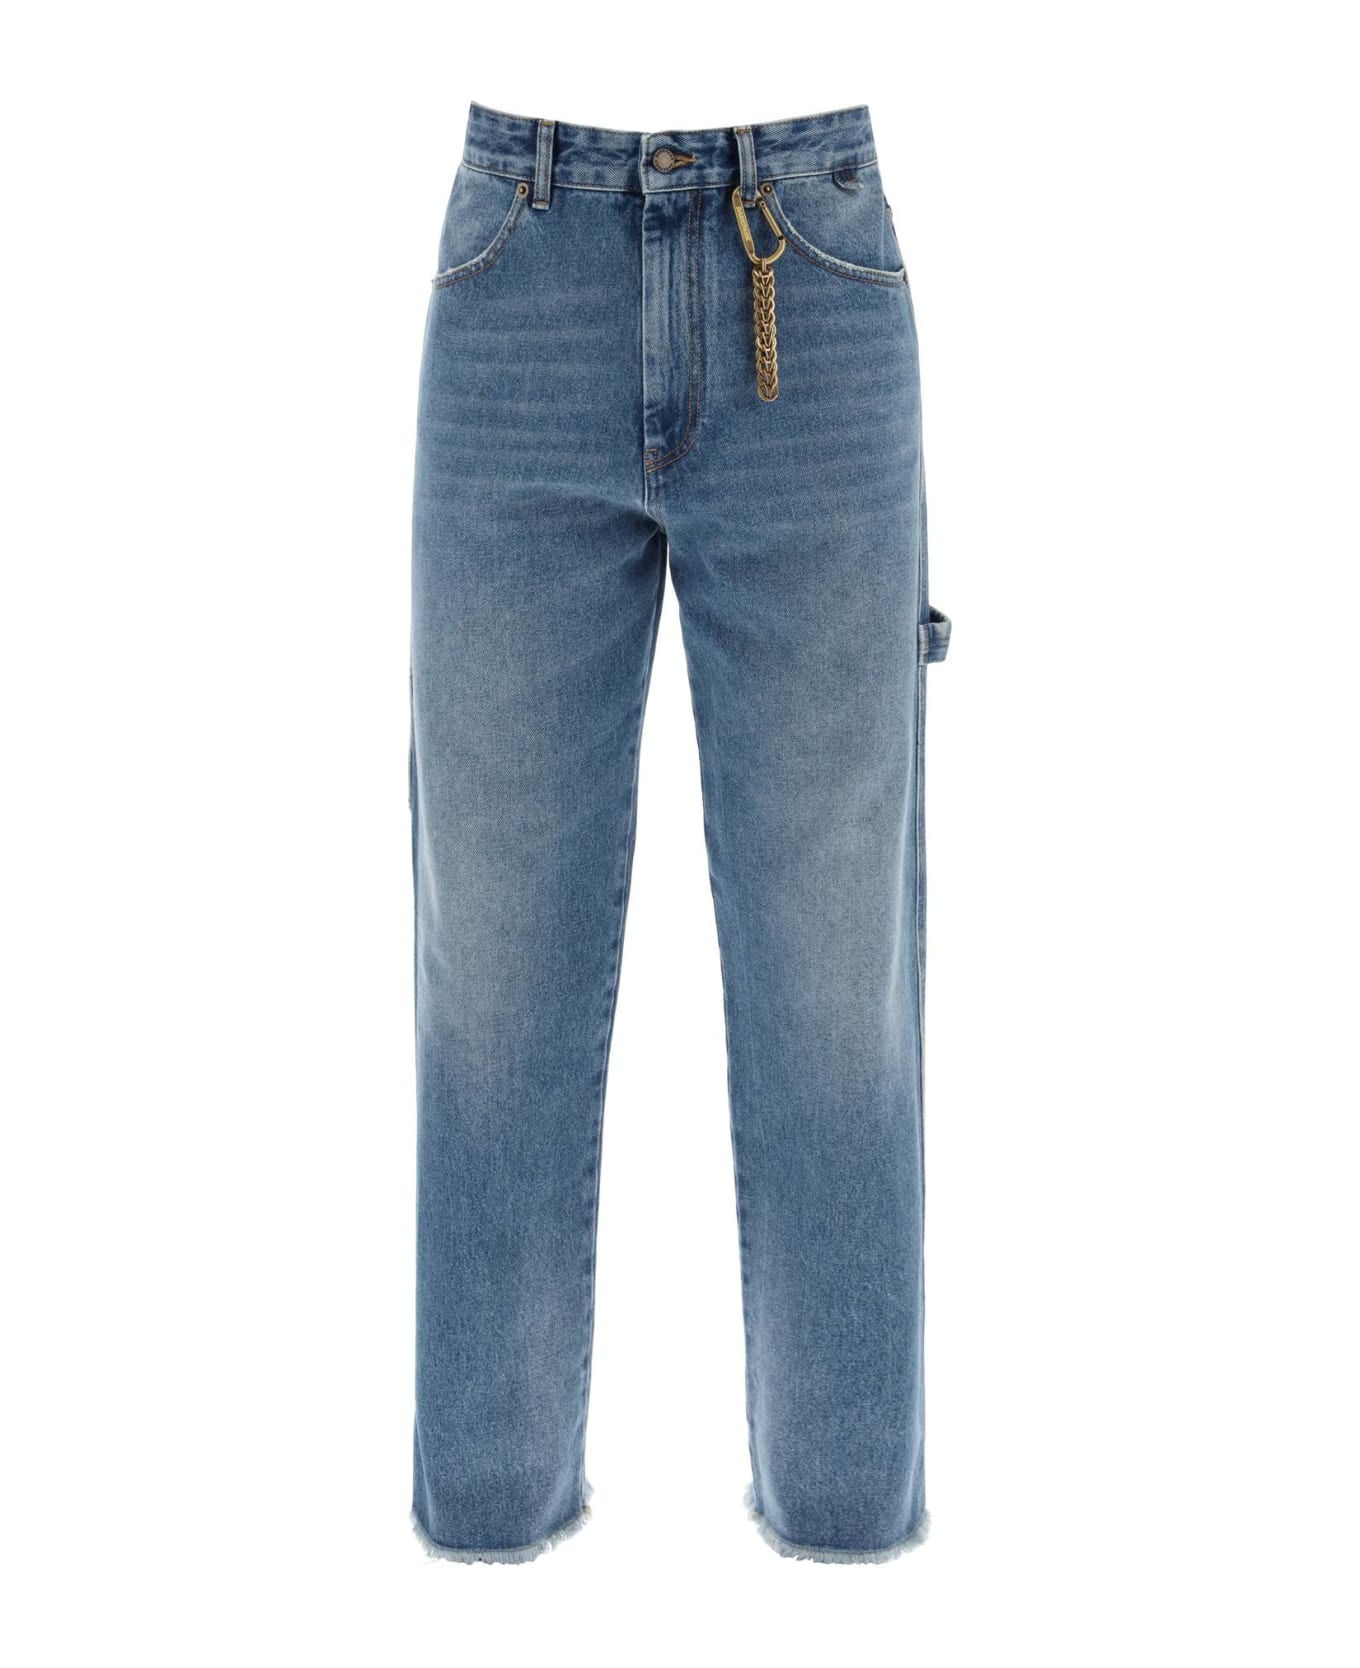 DARKPARK John Workwear Jeans - MEDIUM WASH (Blue)